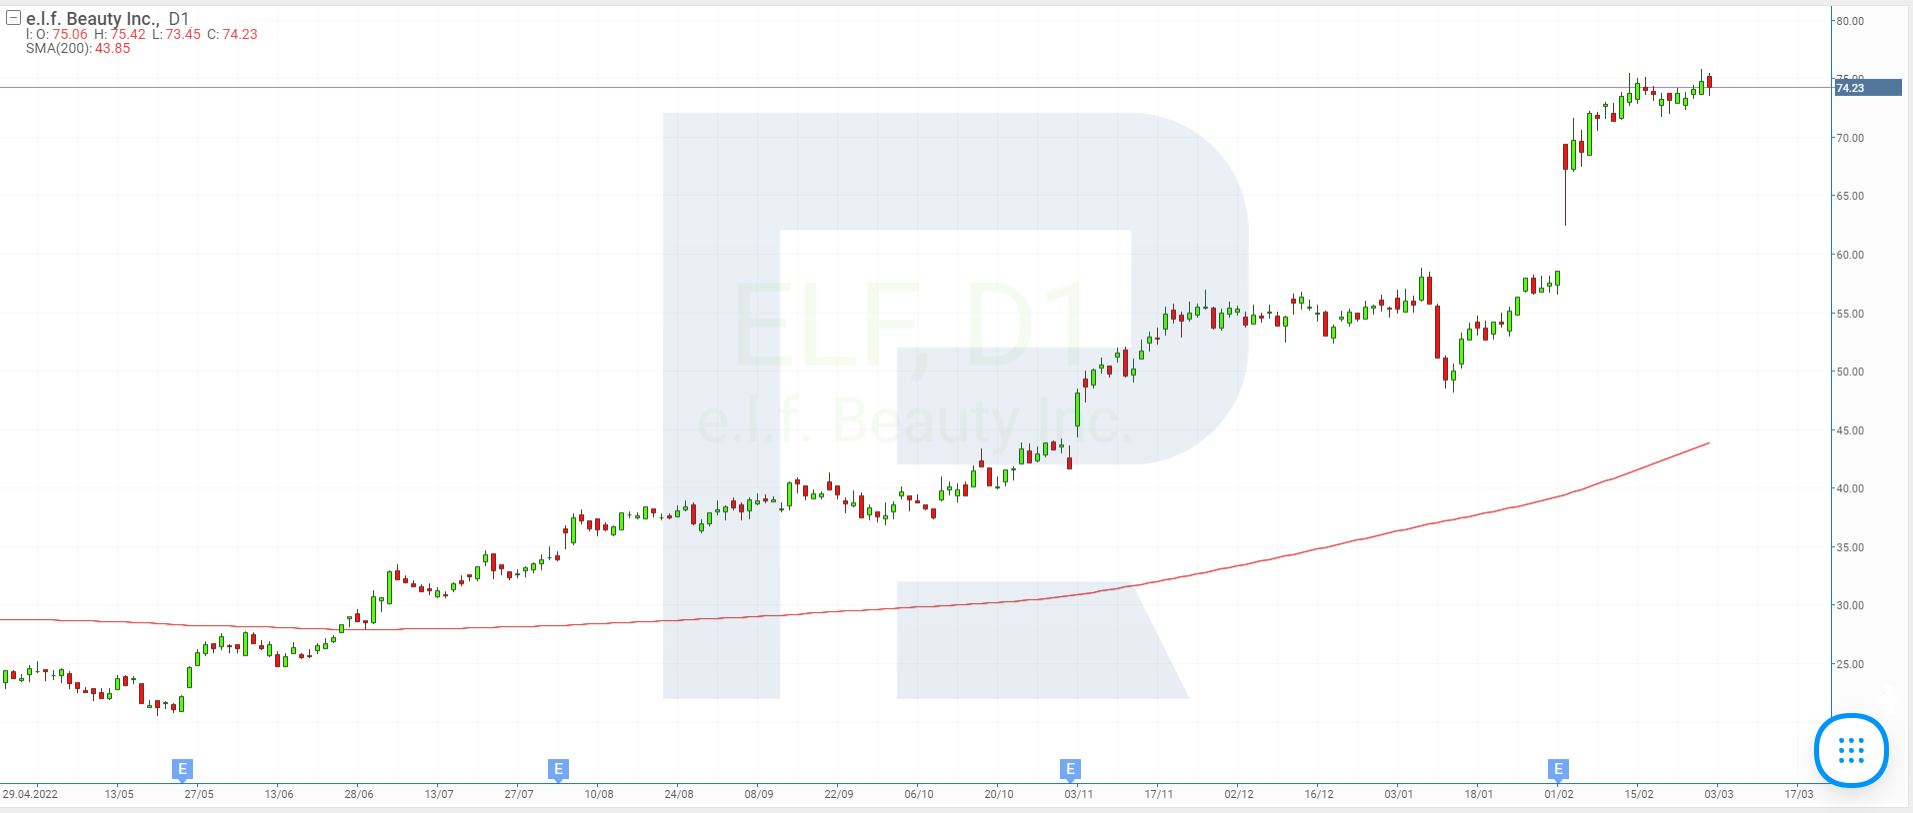 Stock price charts of e.l.f. Beauty Inc.